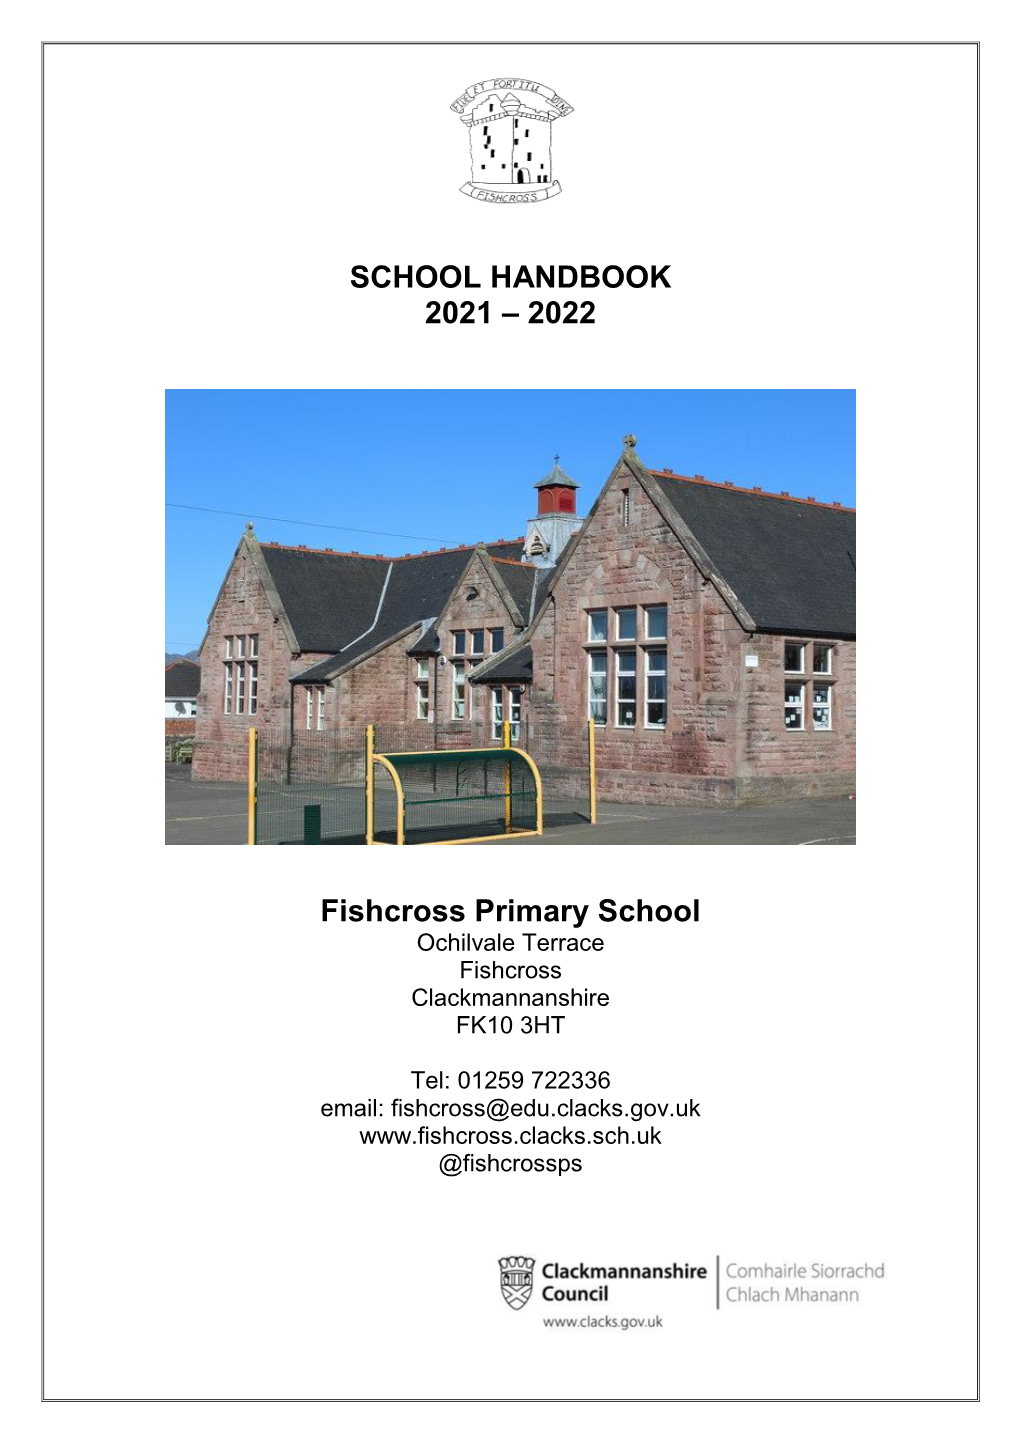 Fishcross Primary School Handbook